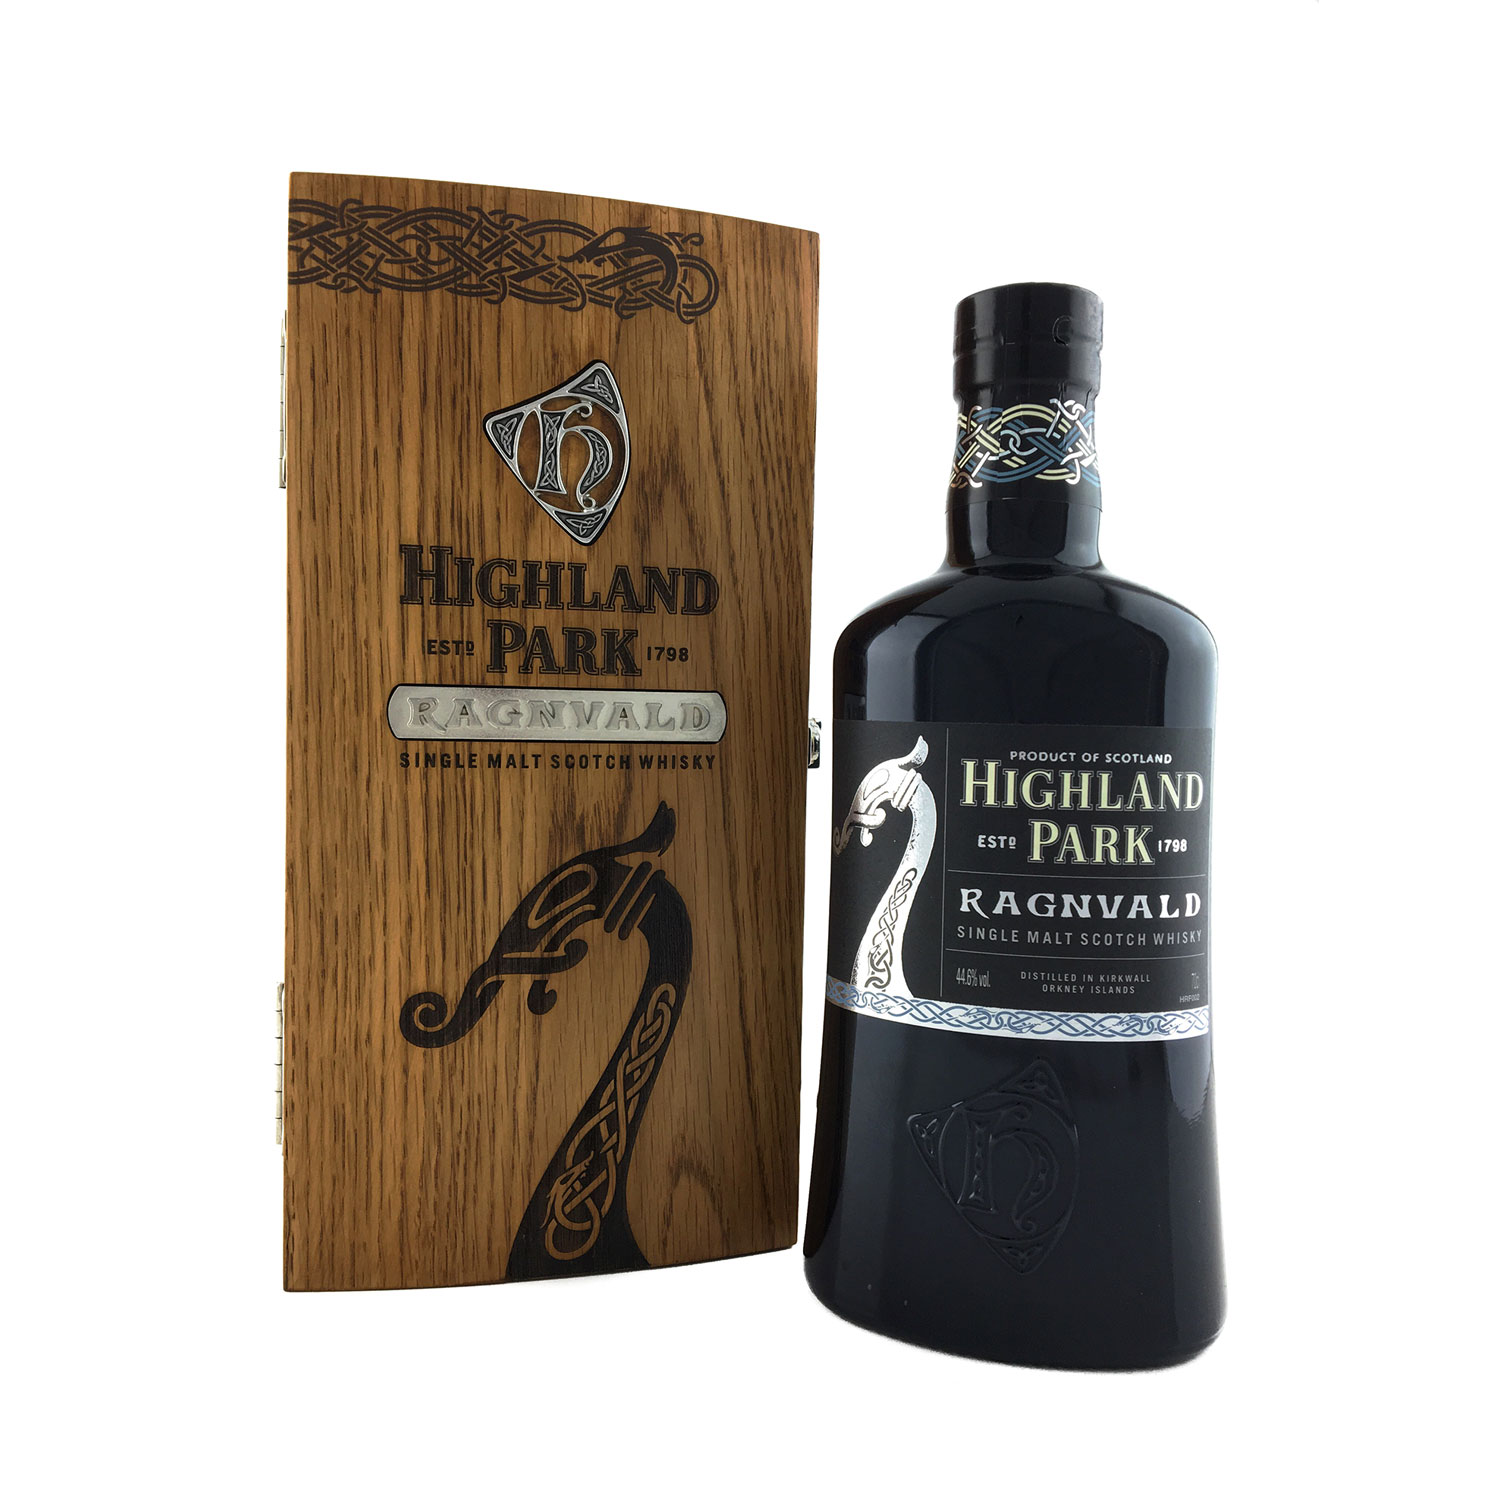 Highland Park Ragnvald, Scottish Whisky, The Old Barrelhouse